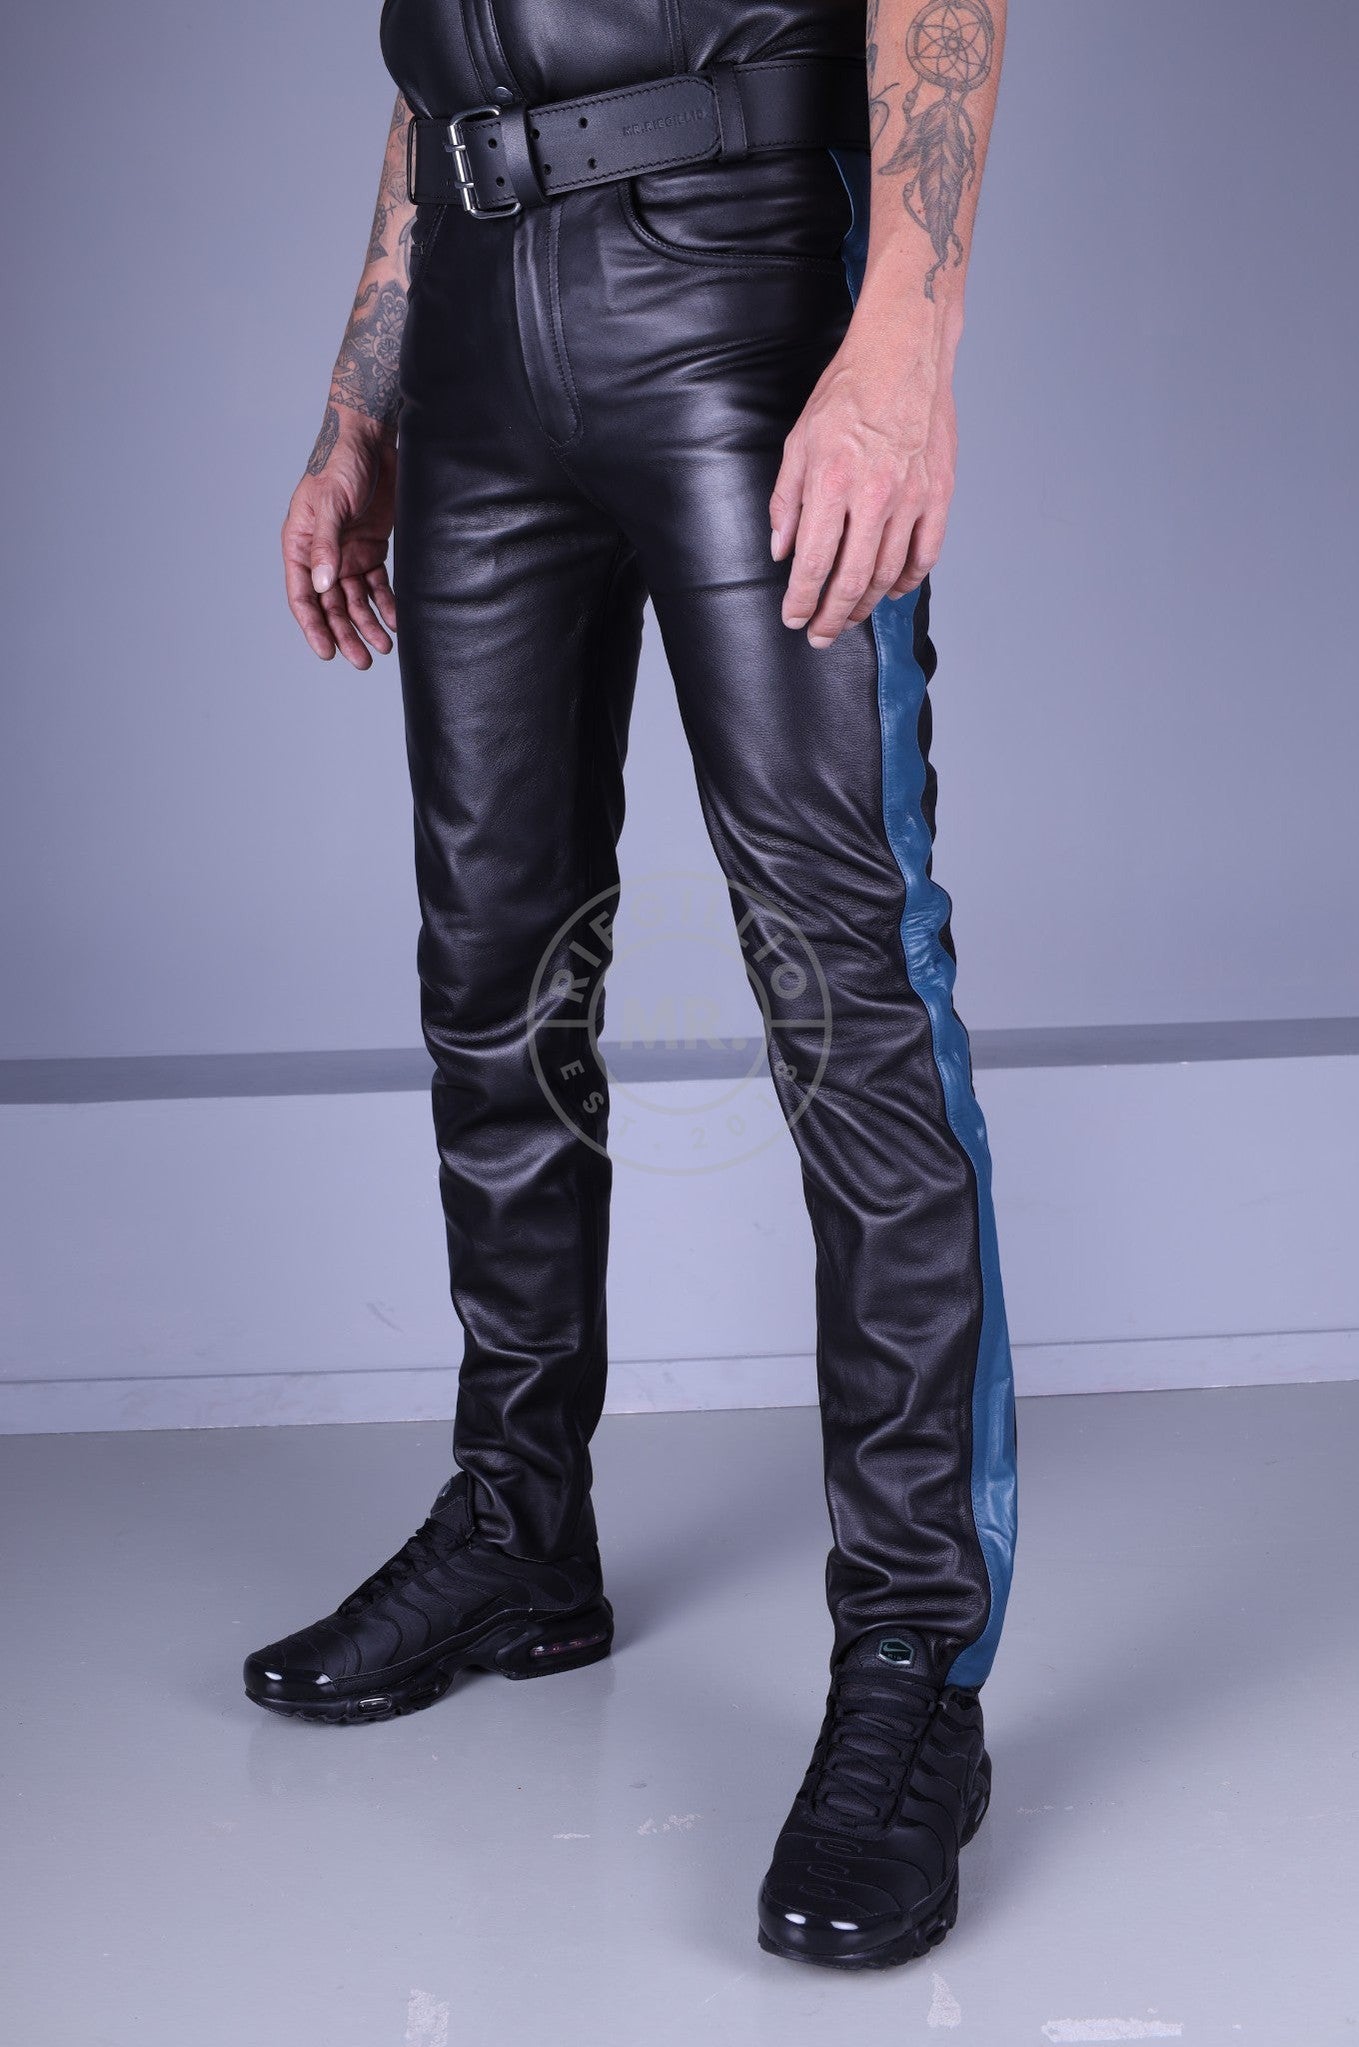 Black Leather 5 Pocket Pants - Jeans Blue Stripe by MR. Riegillio